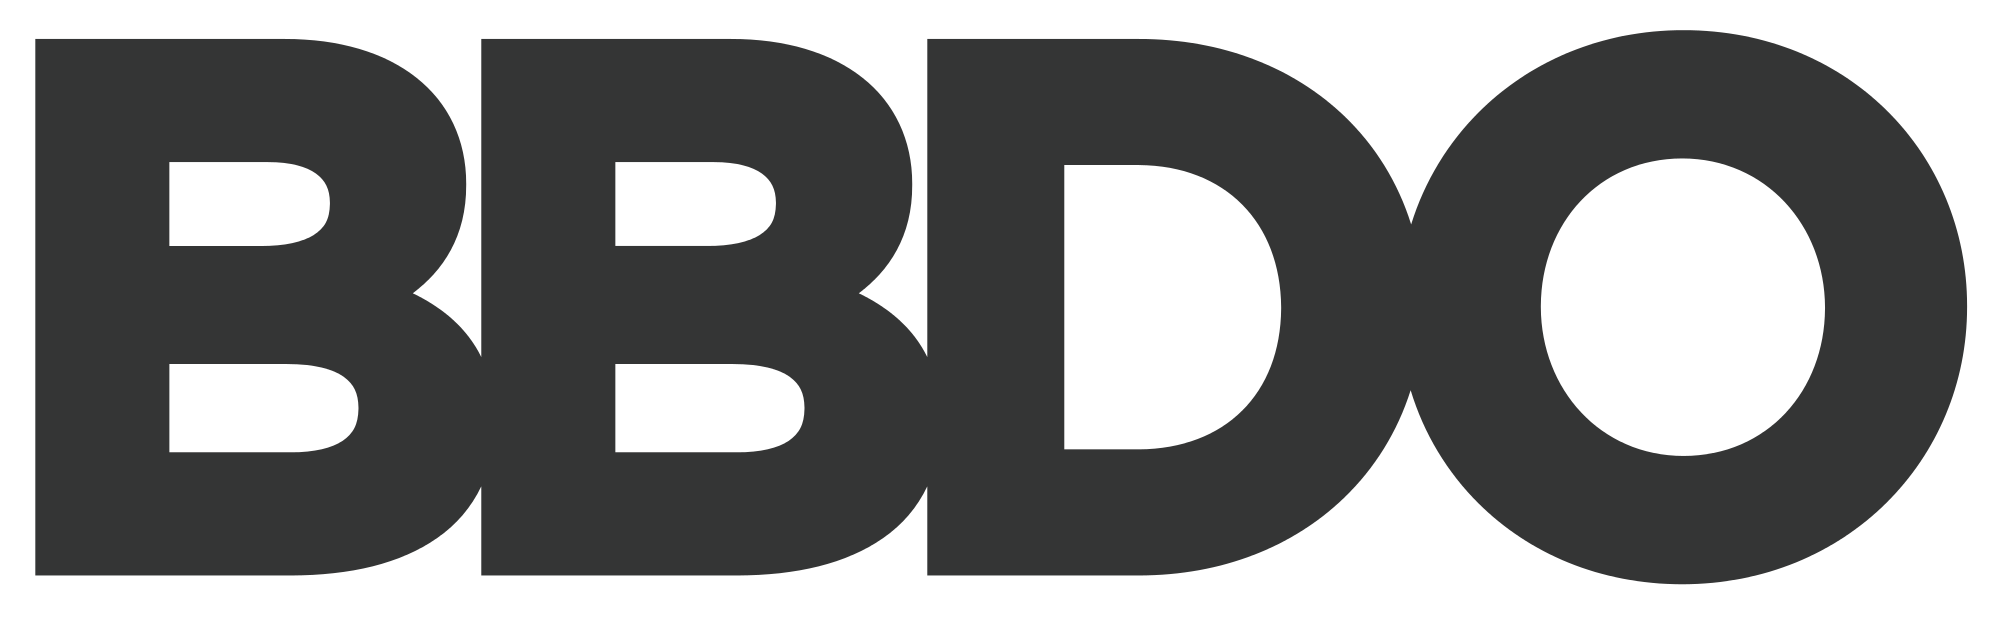 Звукорежиссура и саунд дизайн sounddesigninstitute ru. BBDO Group. BBDO рекламное агентство логотип. Агентство BBDO Moscow логотип. BBDO Group логотип.